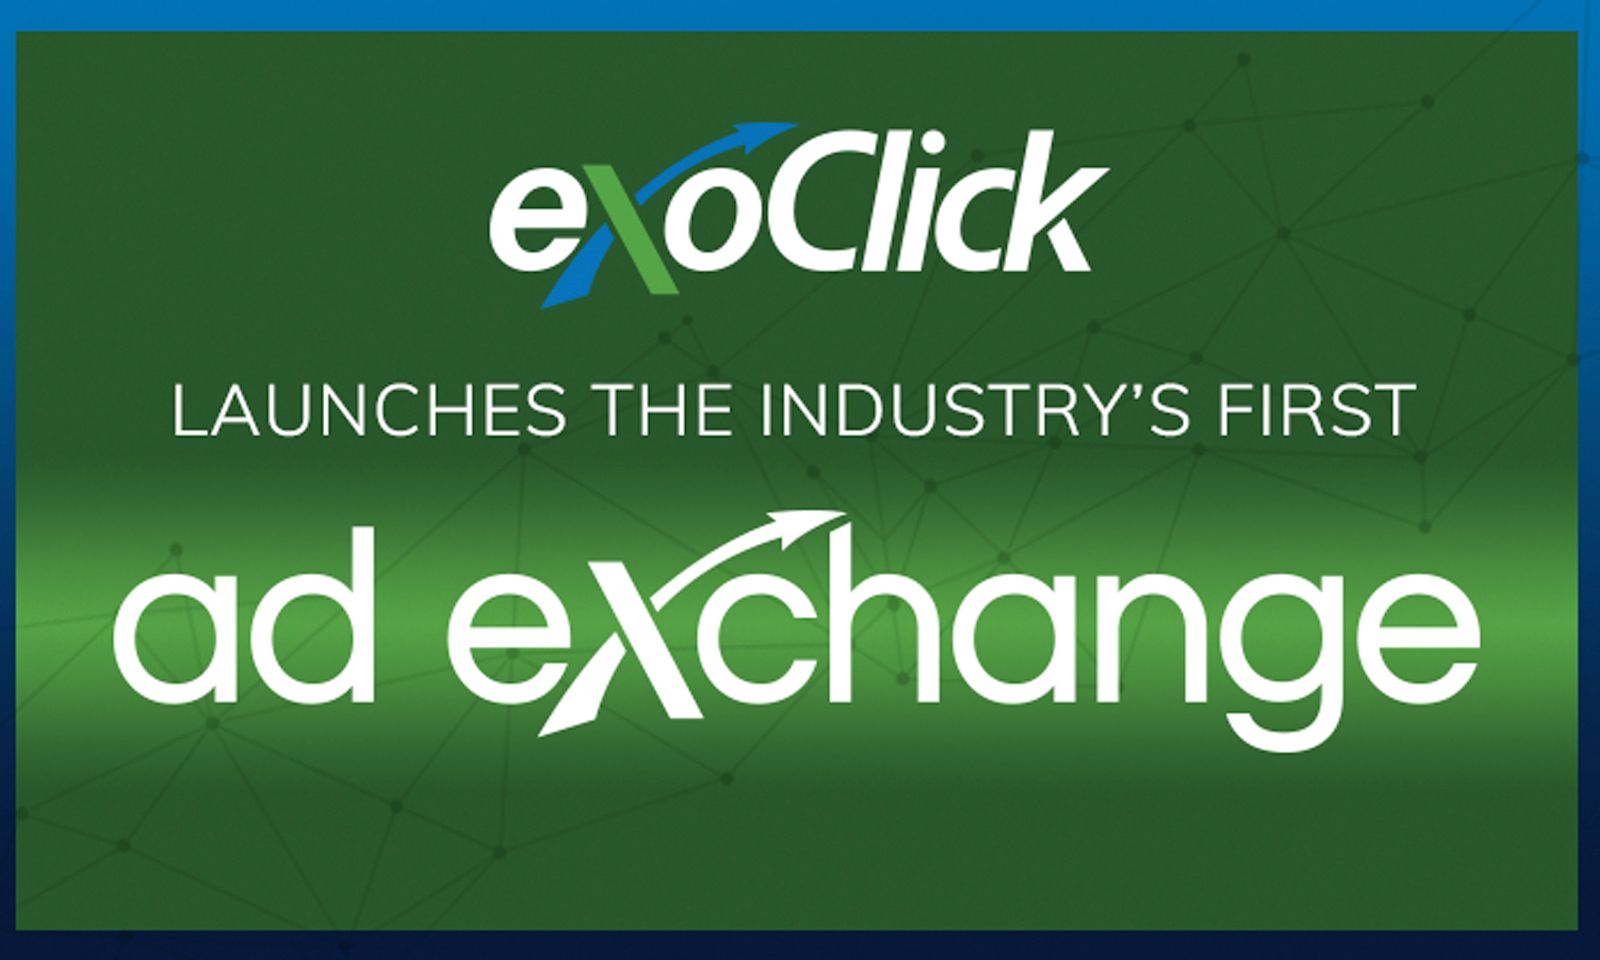 ExoClick Debuts Industry’s 1st Ad Exchange